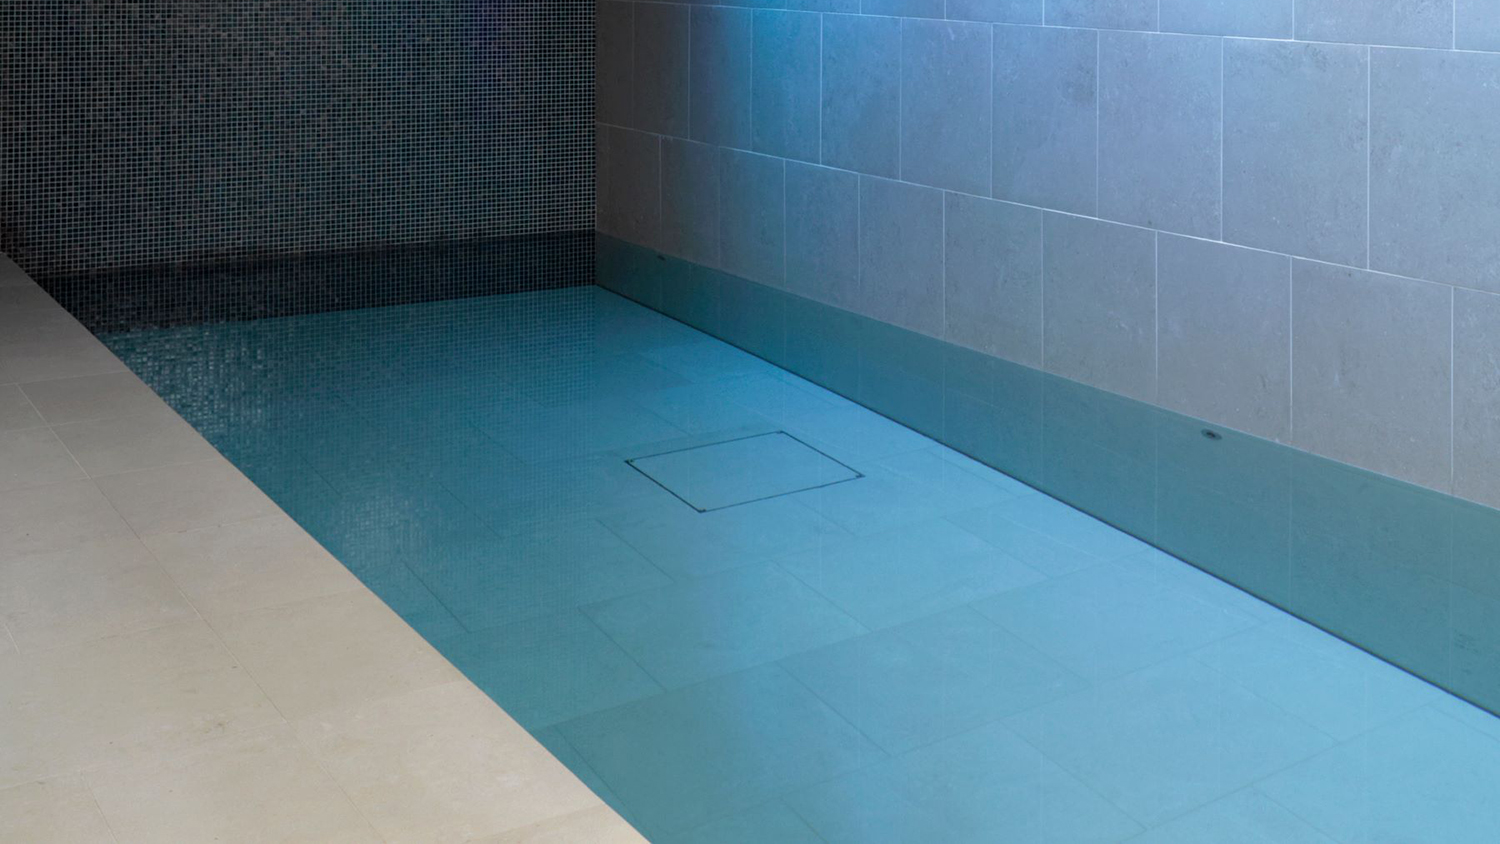 hydro floors raise and lower to make hidden swimming pools hydrofloors 009